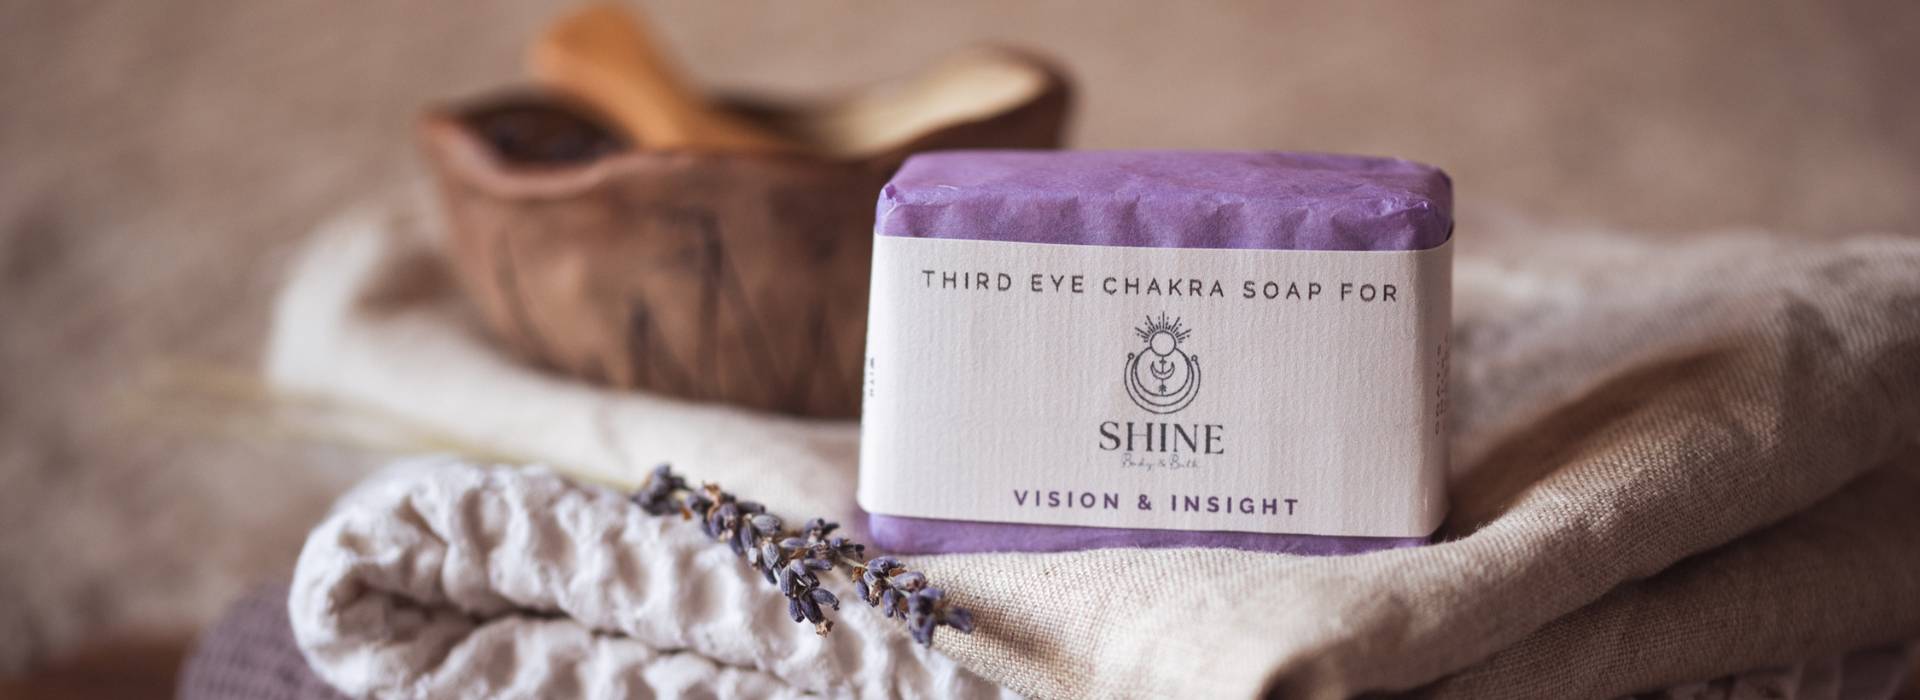 Third Eye Chakra Soap, wrapped | Homepage banner | Shine Body & Bath